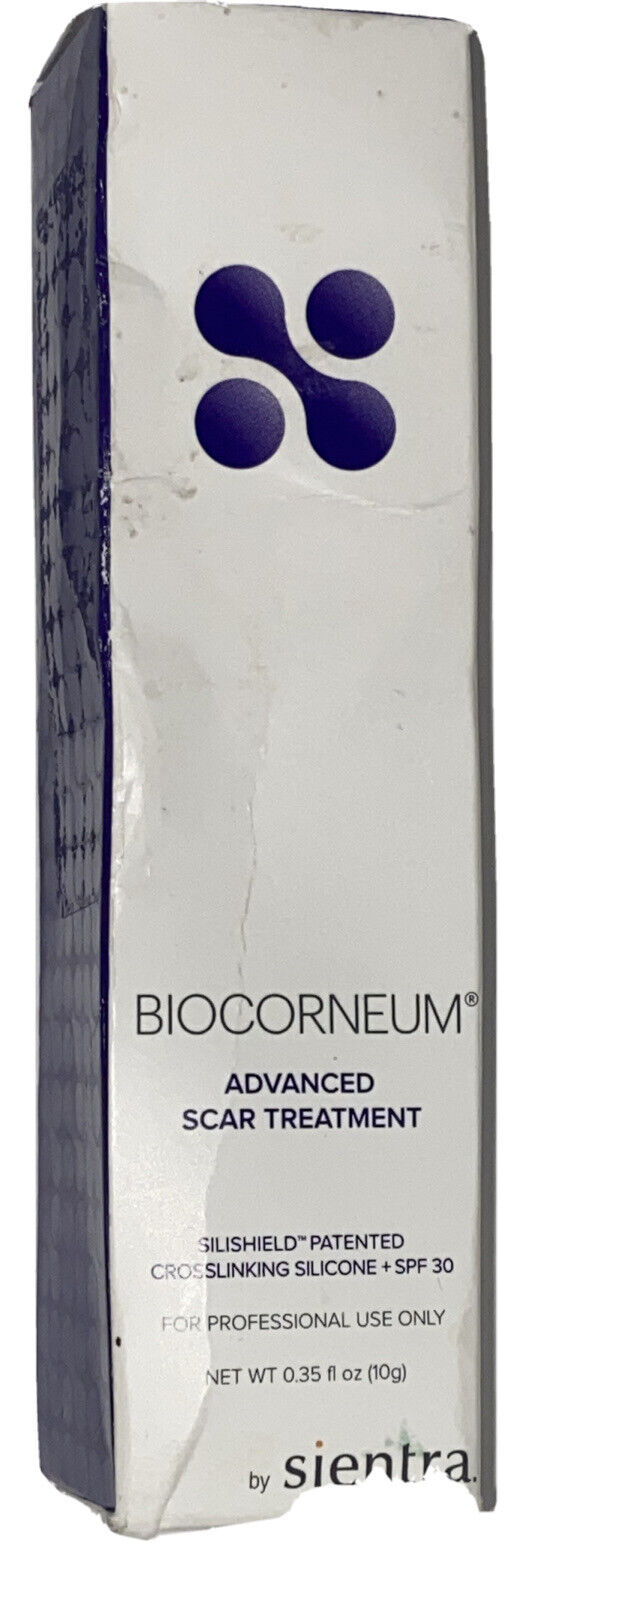 Biocorneum Advanced Scar Treatment - .35 oz / 10 g